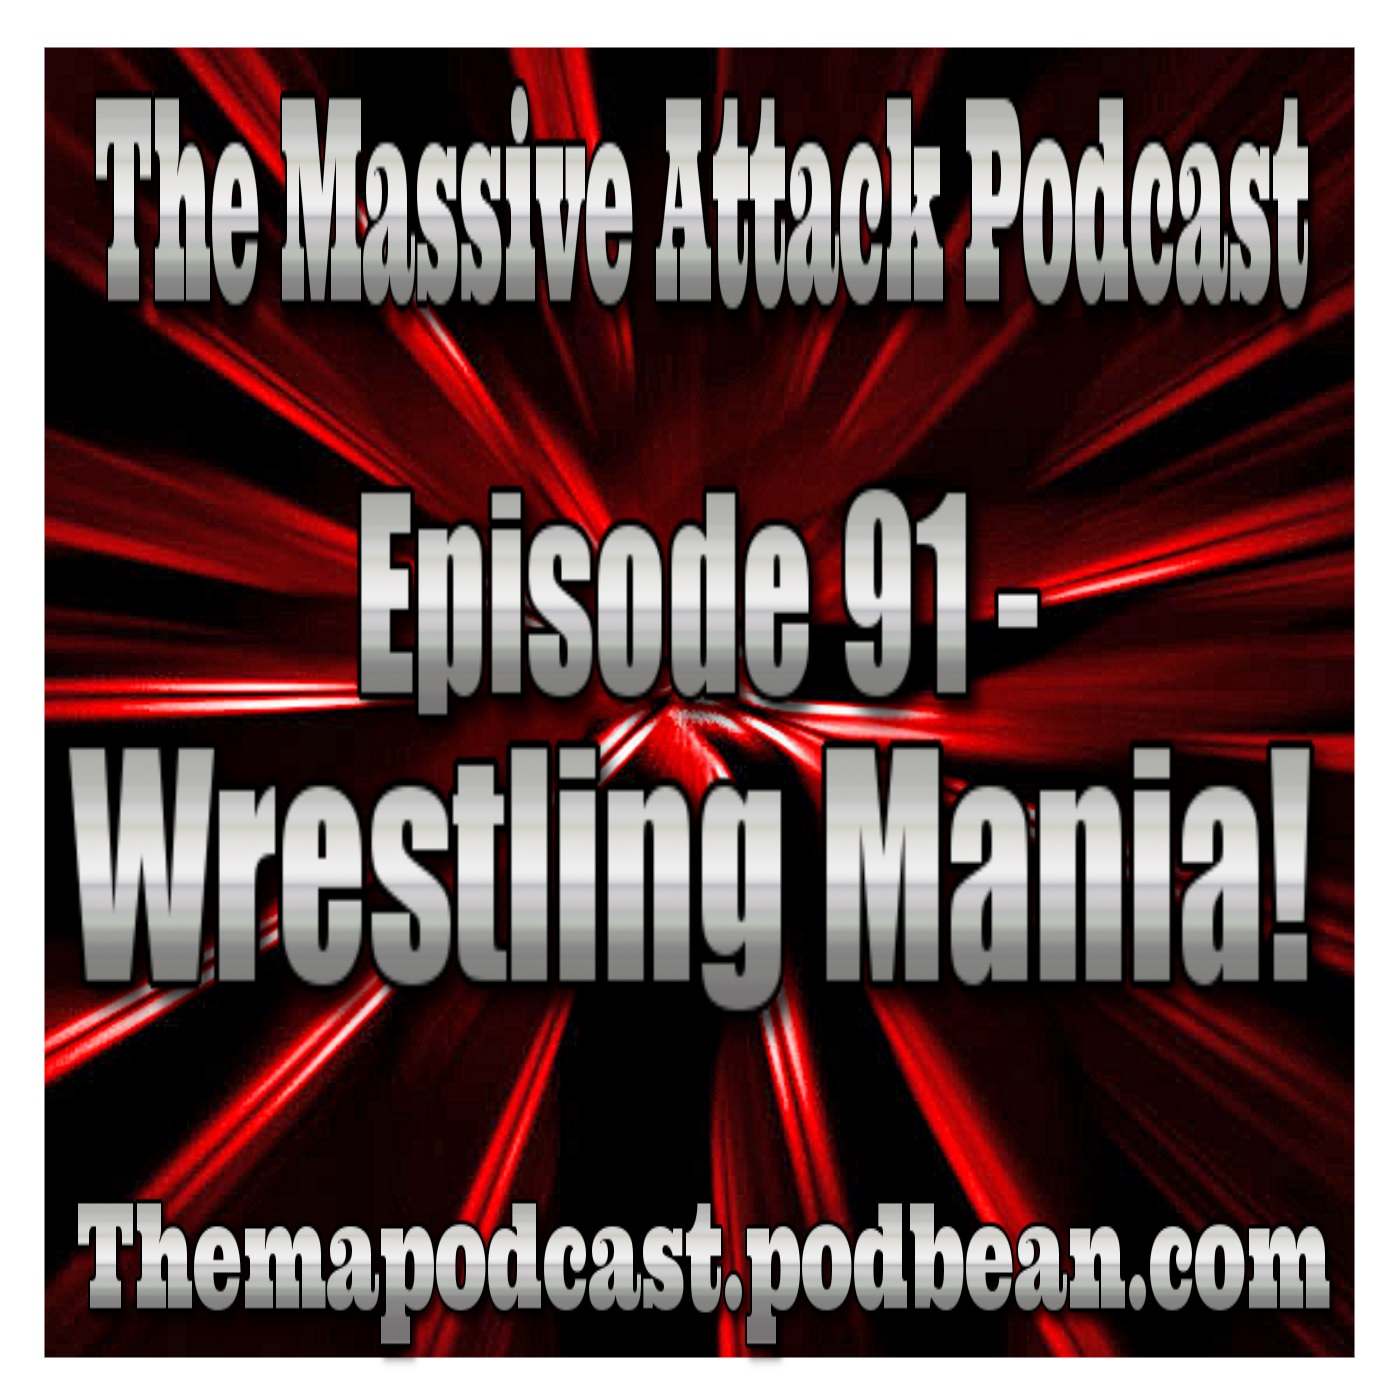 Episode 91 - Wrestling Mania!